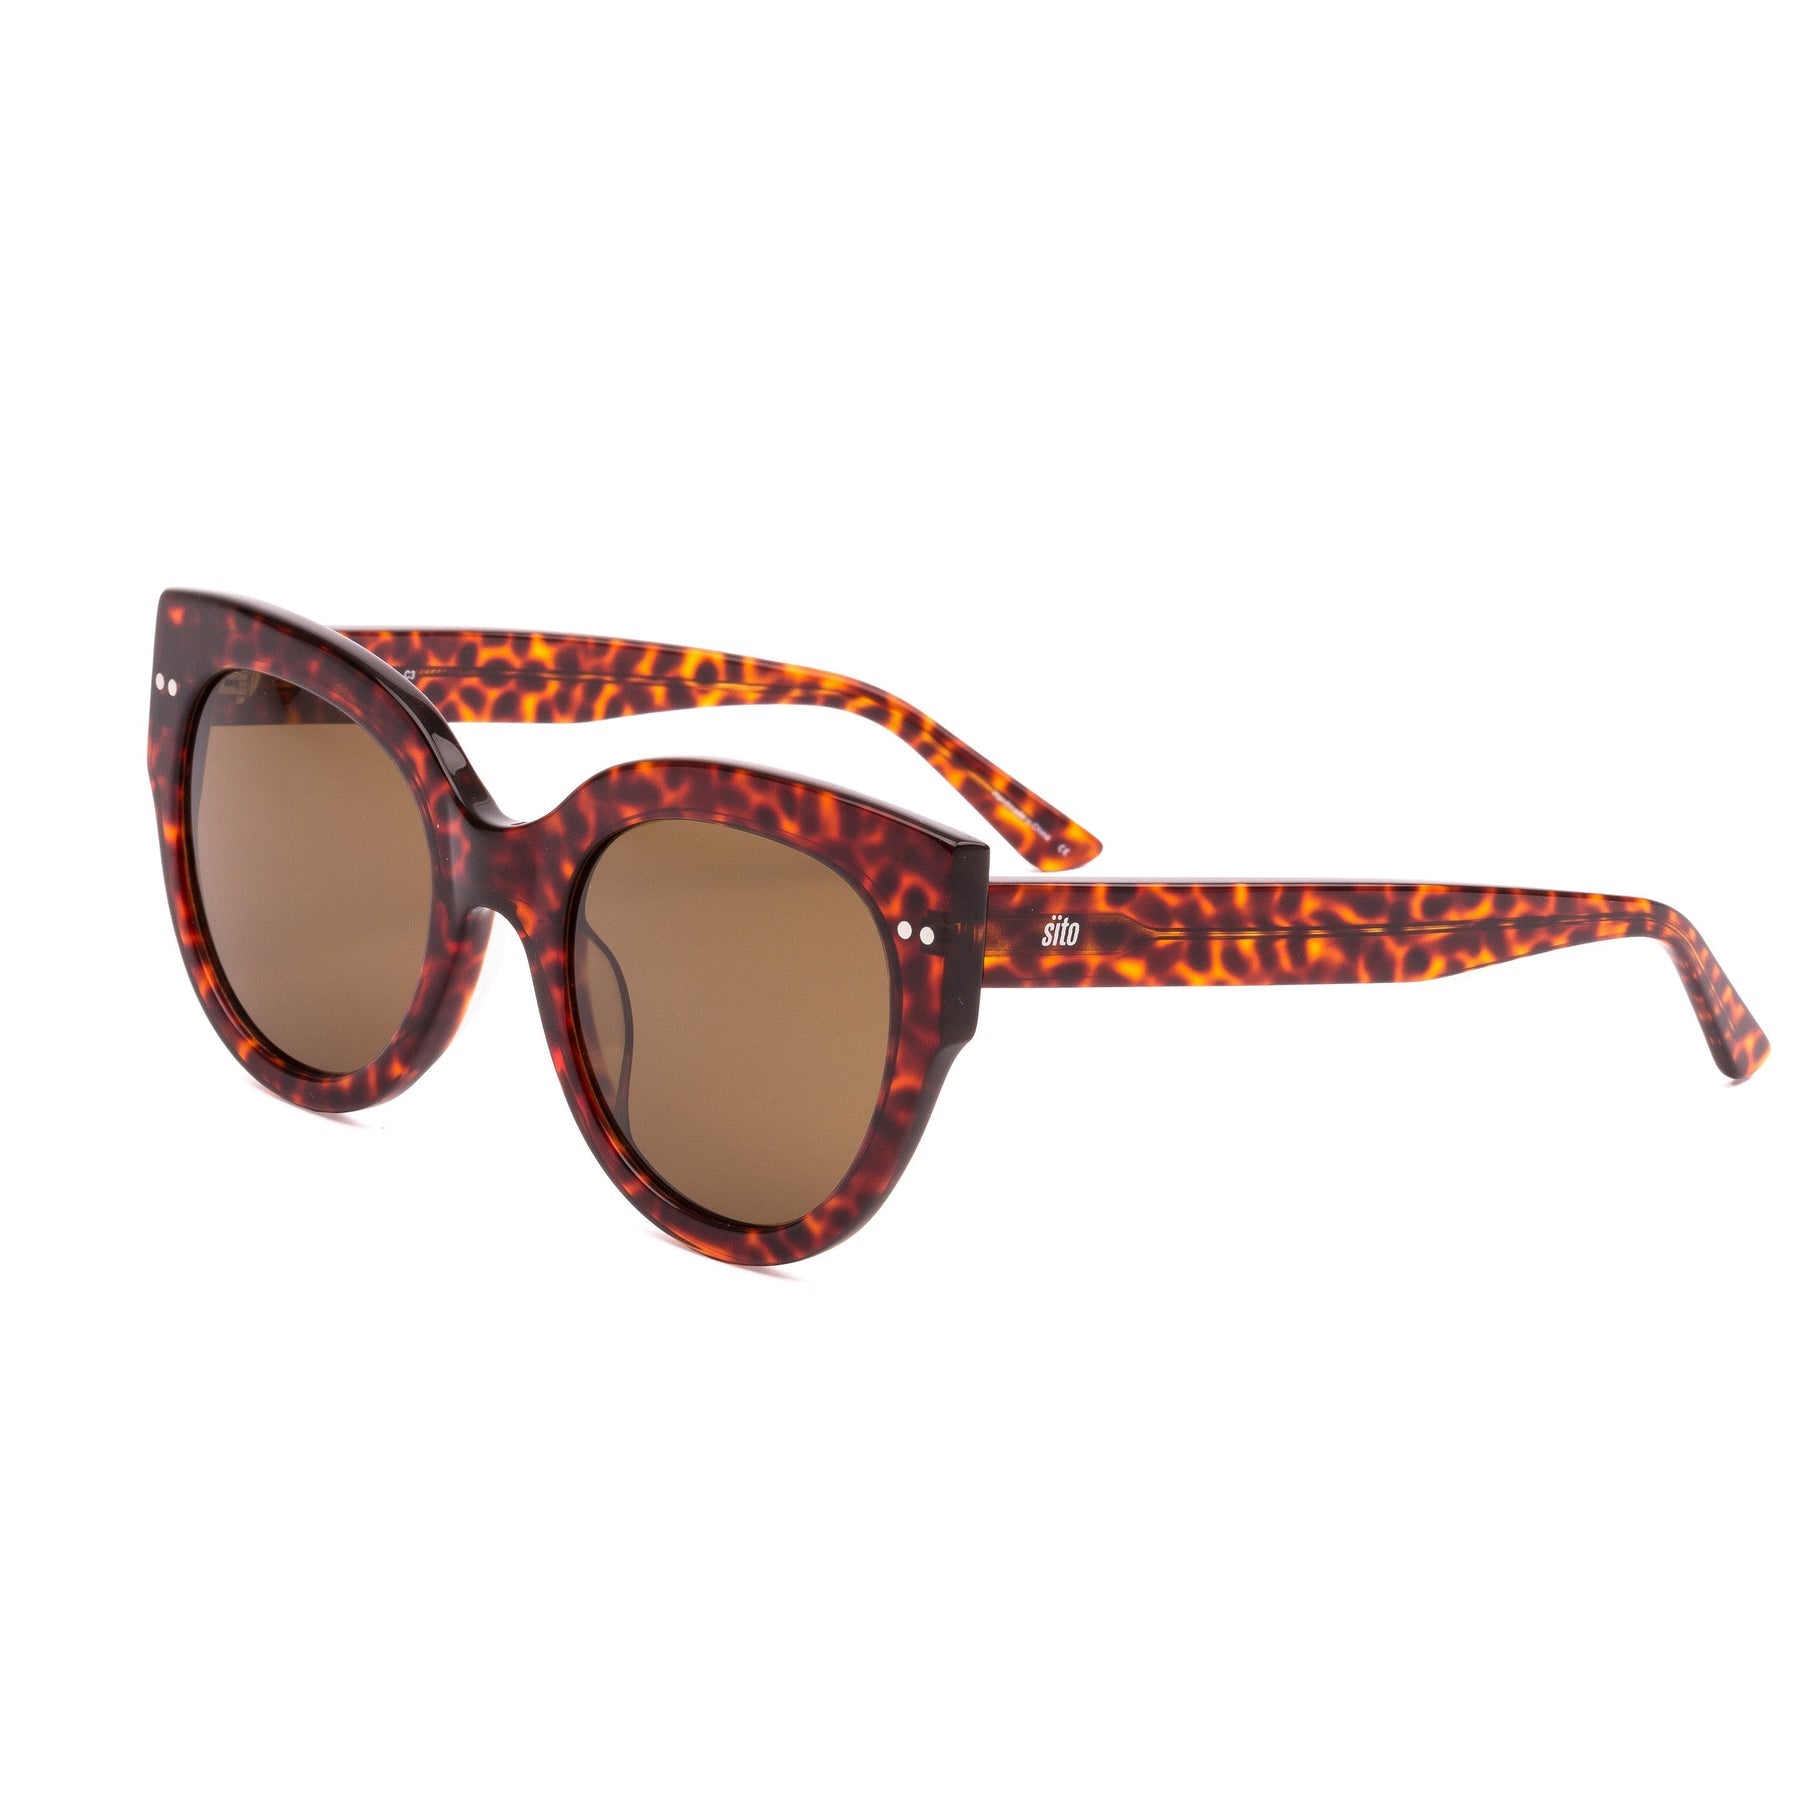 Sito Good Life Polarized Sunglasses Cheetah Brown